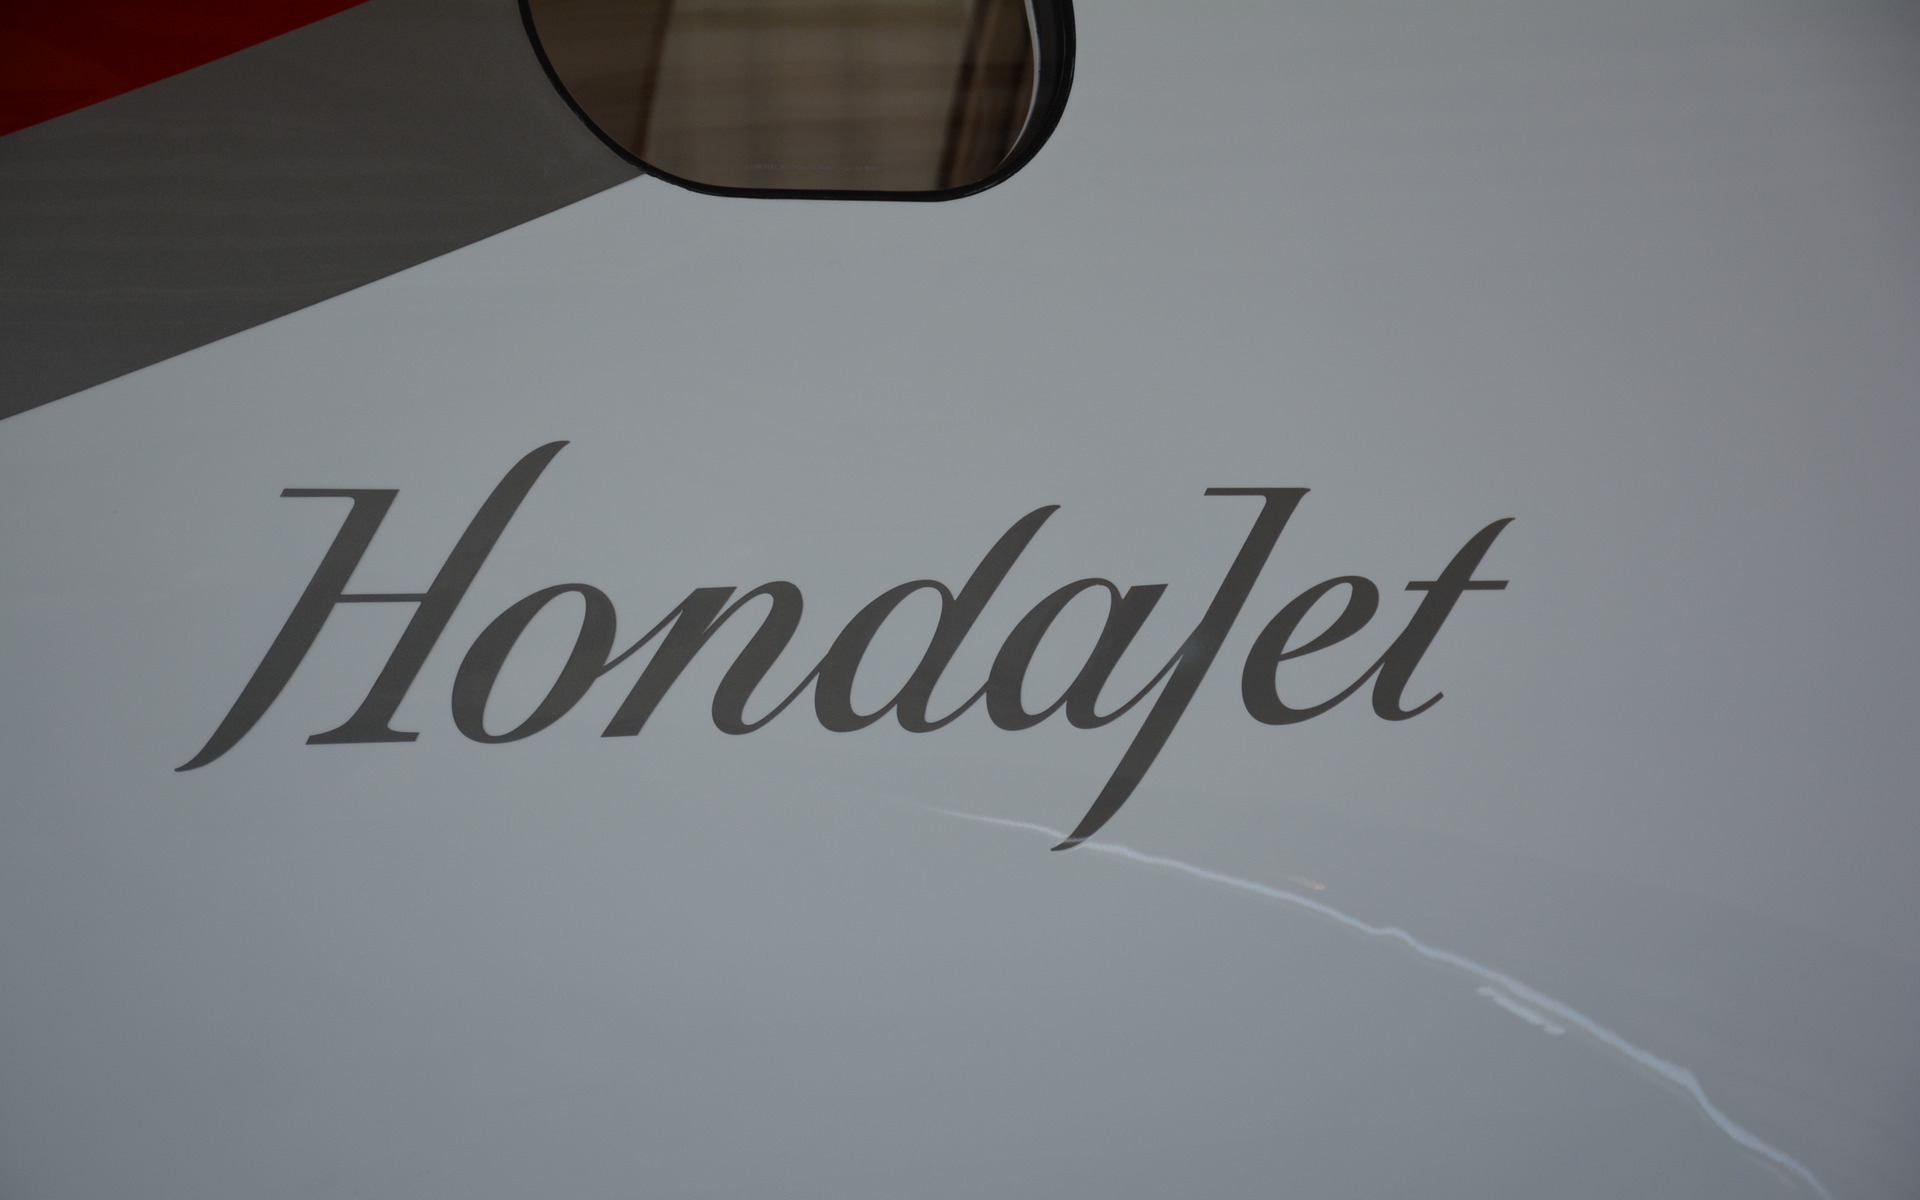 A look at the HondaJet